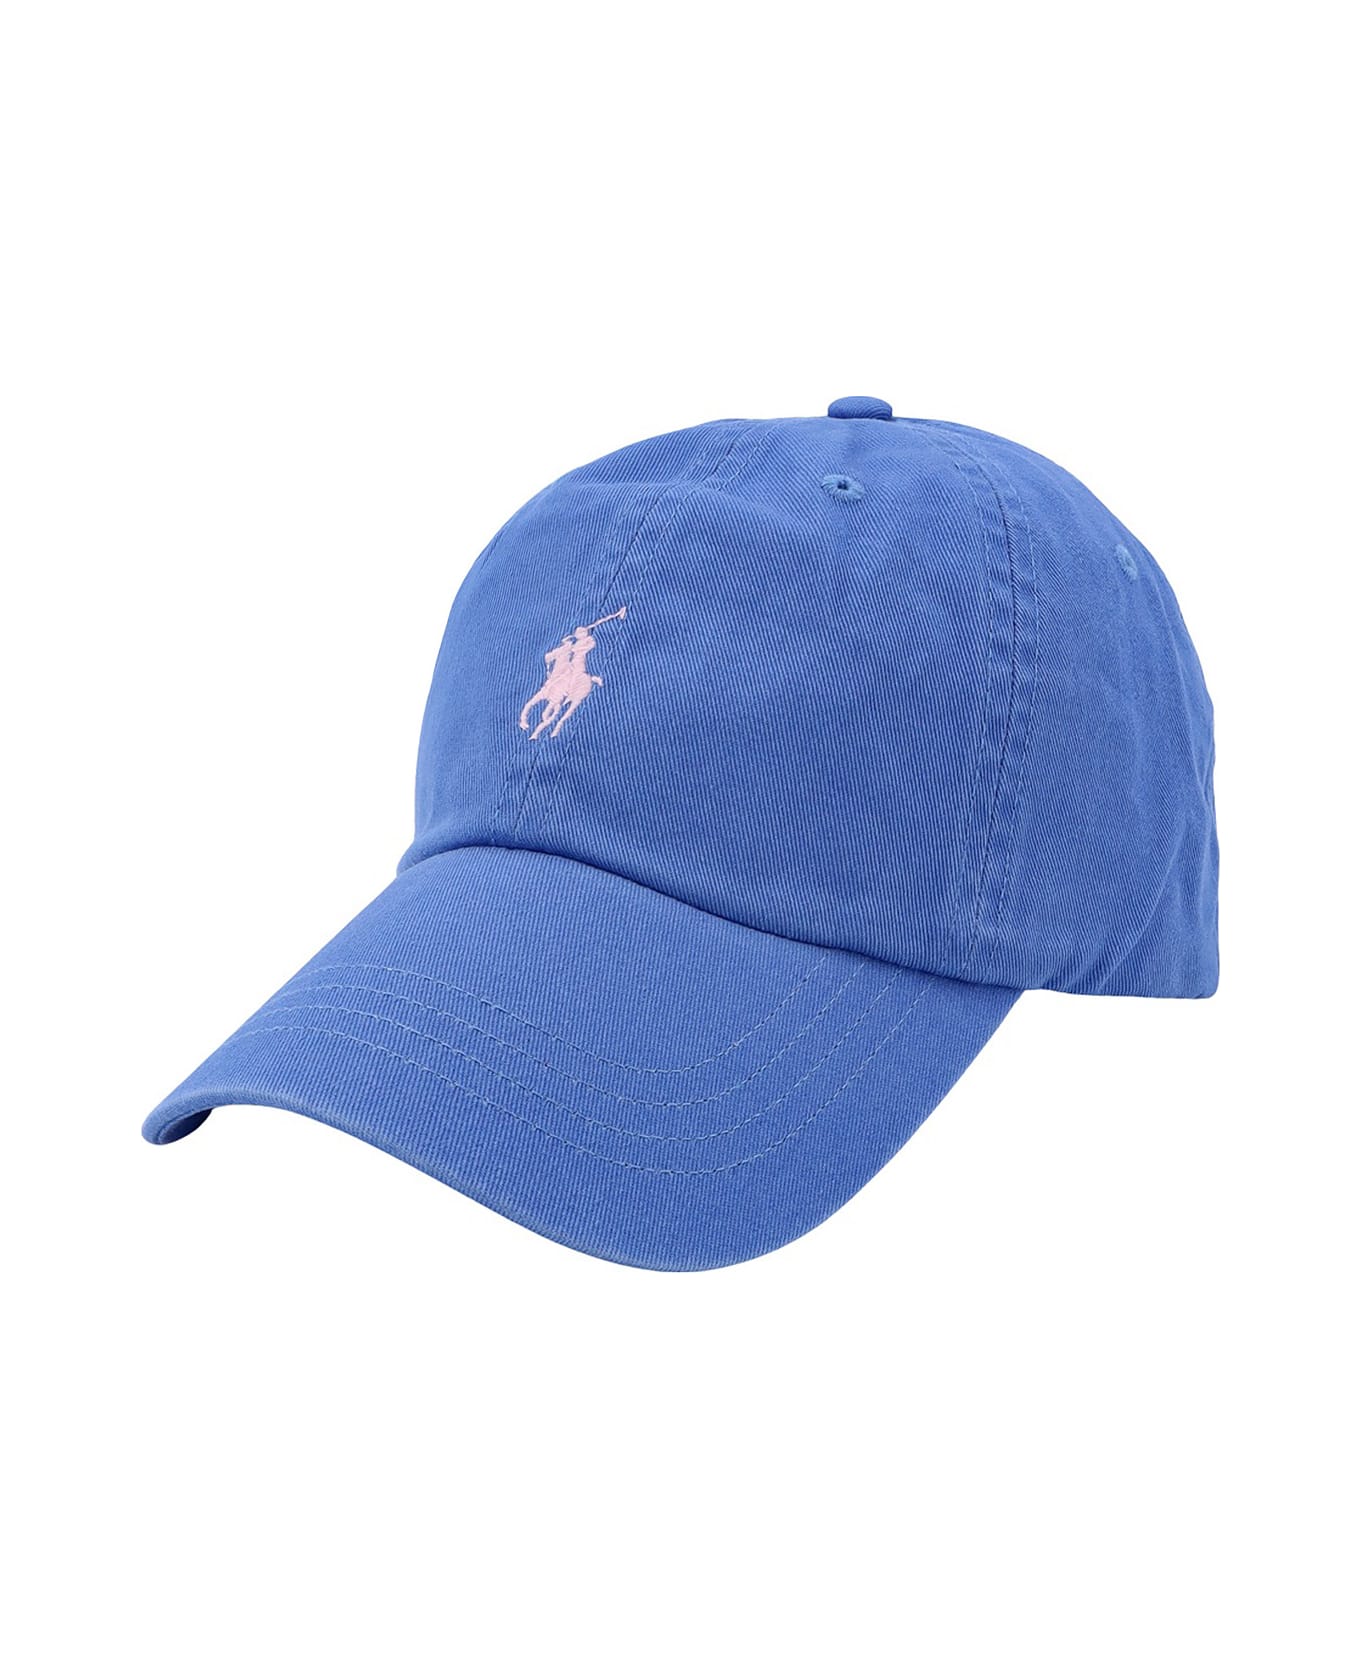 Ralph Lauren Hat - New England Blue 帽子